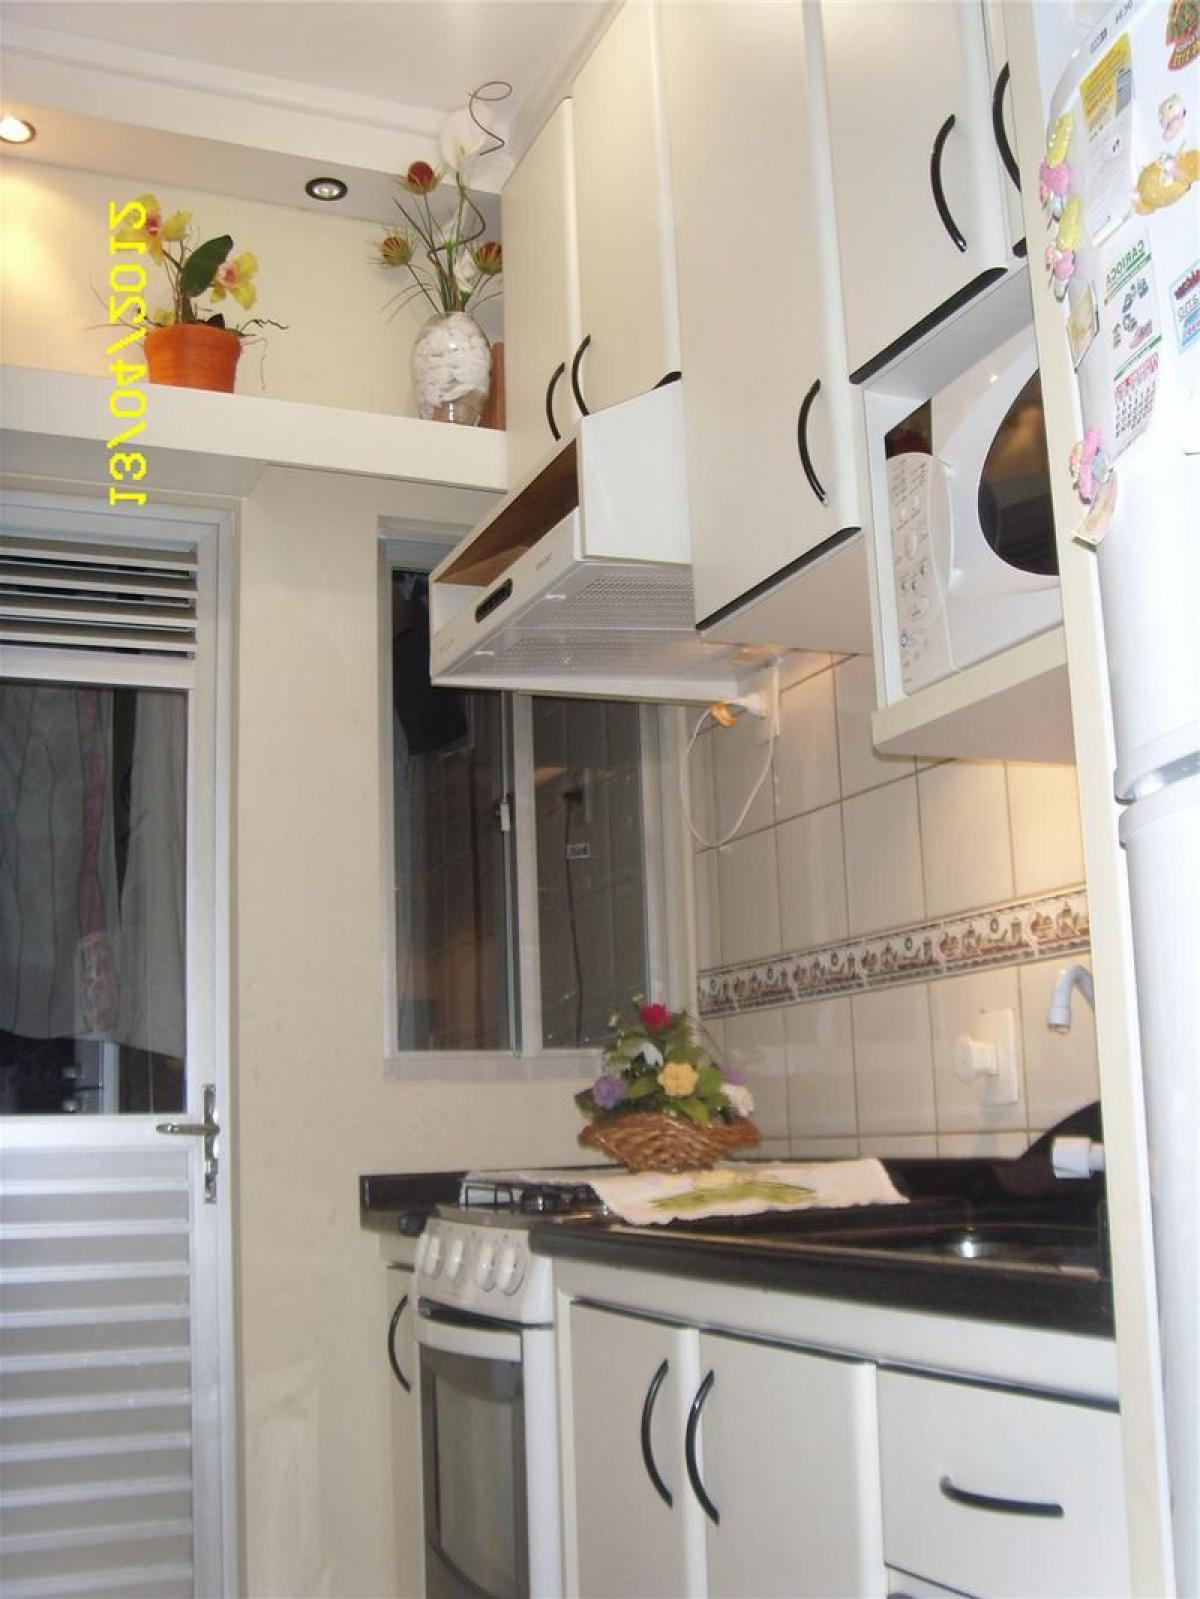 Picture of Apartment For Sale in Biguaçu, Santa Catarina, Brazil